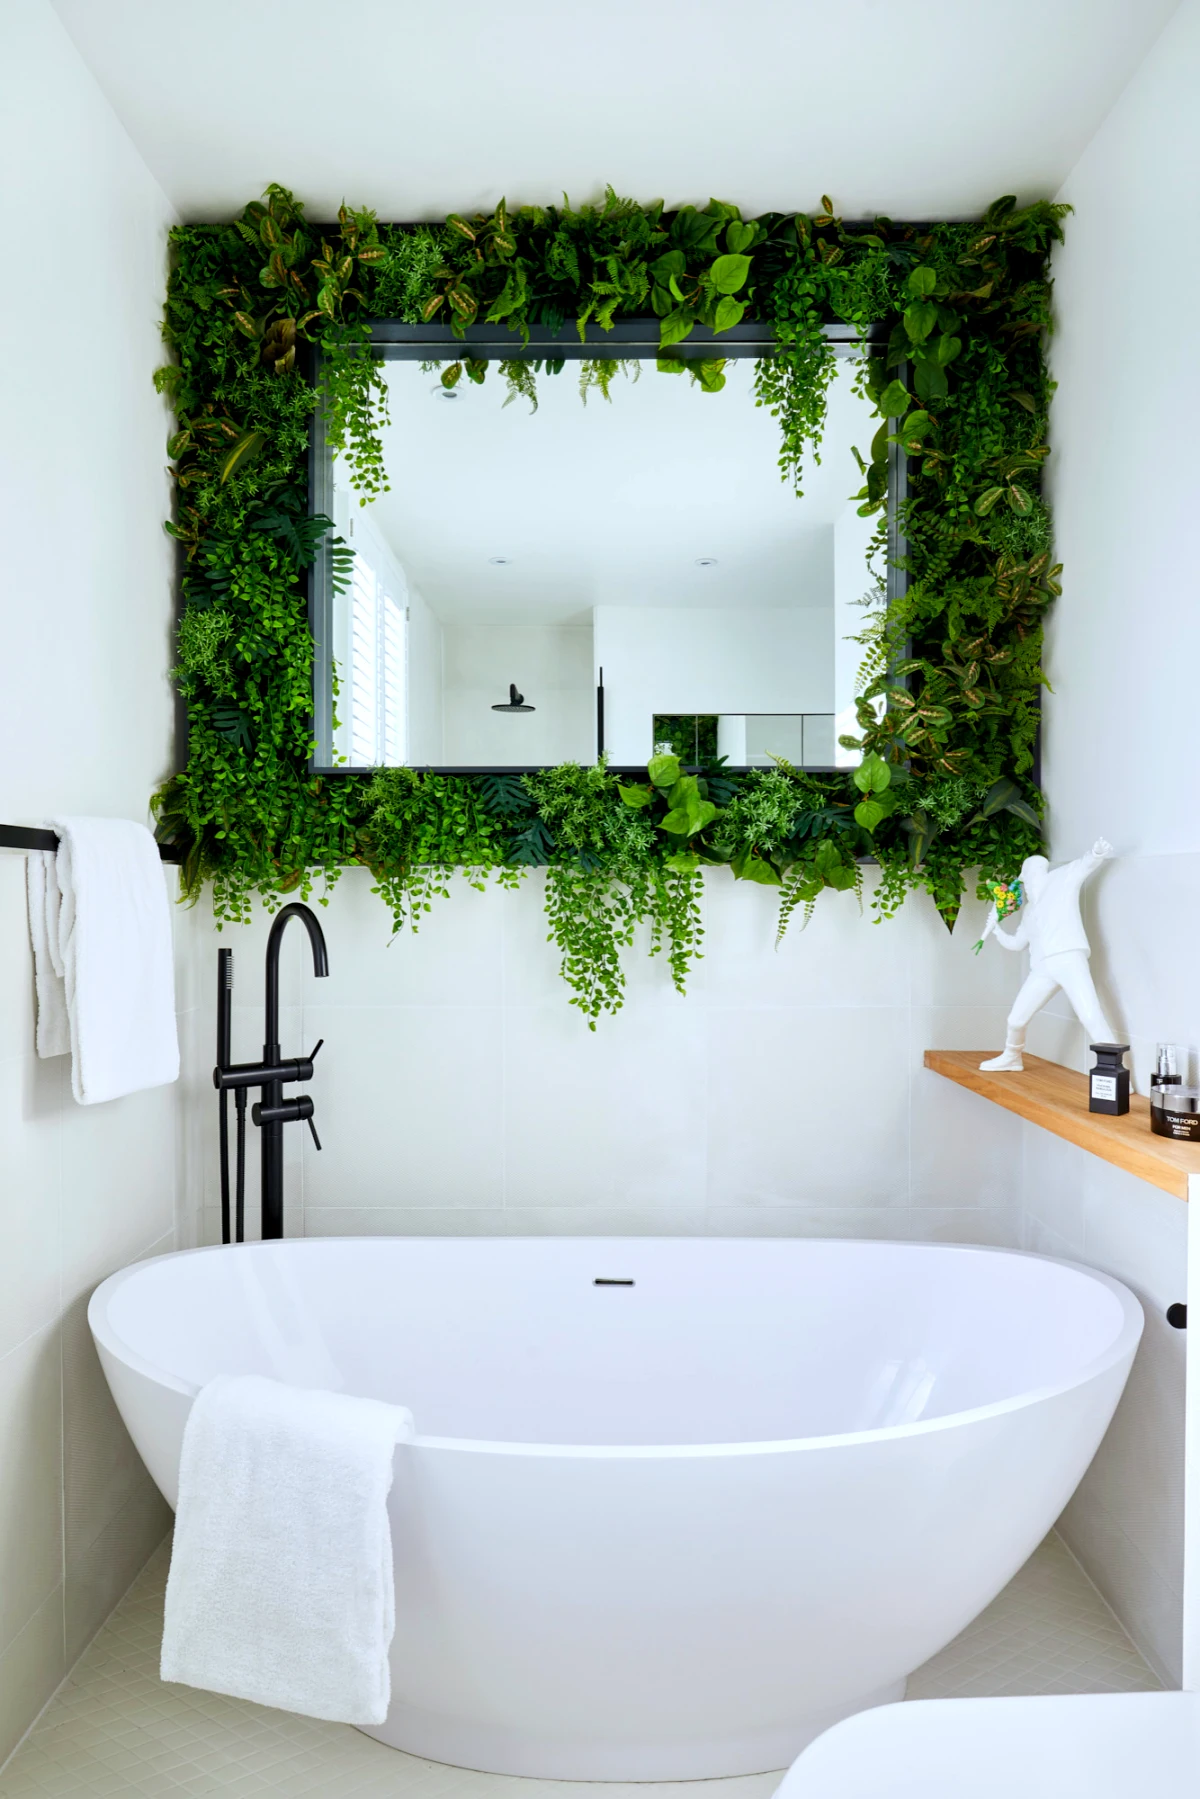 idees creatives pour agrandir petite salle de bain mur vegetal